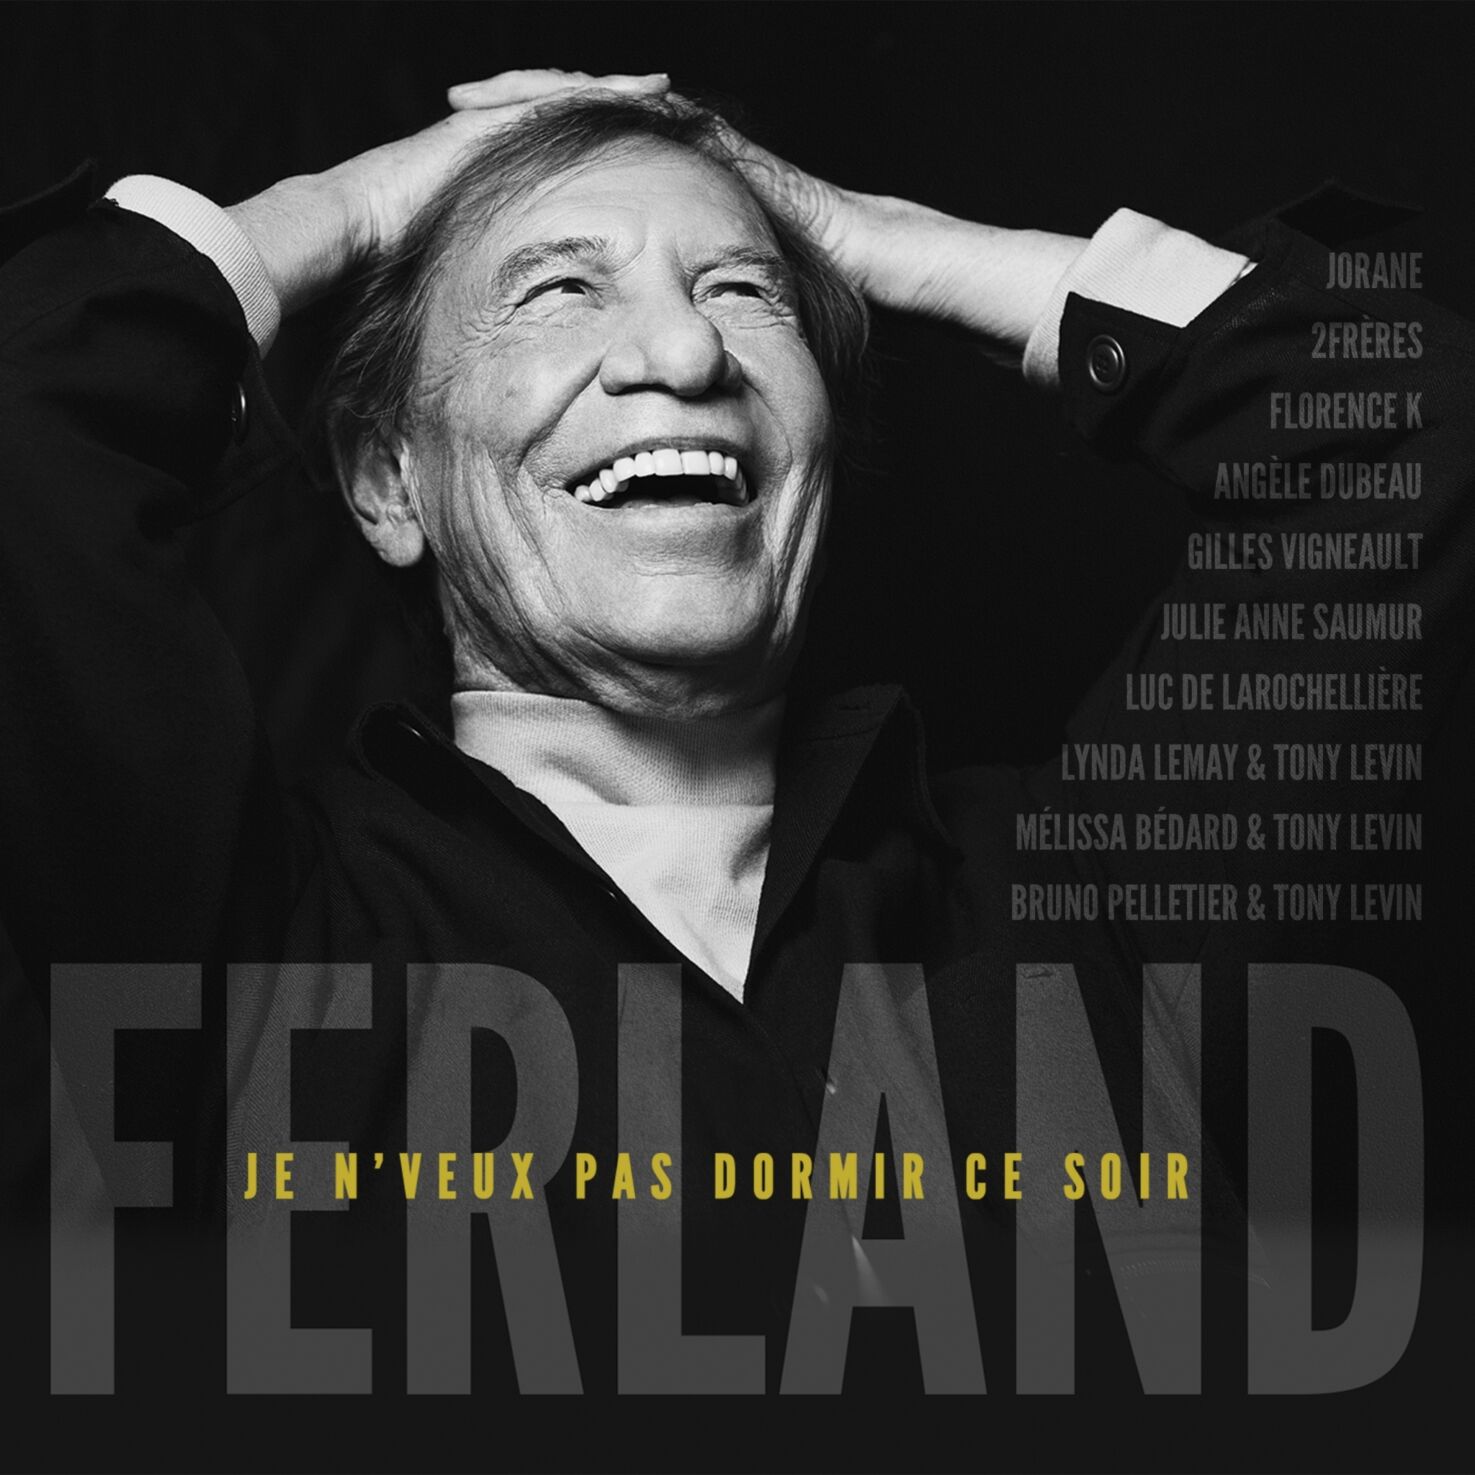 Jean-Pierre Ferland-album